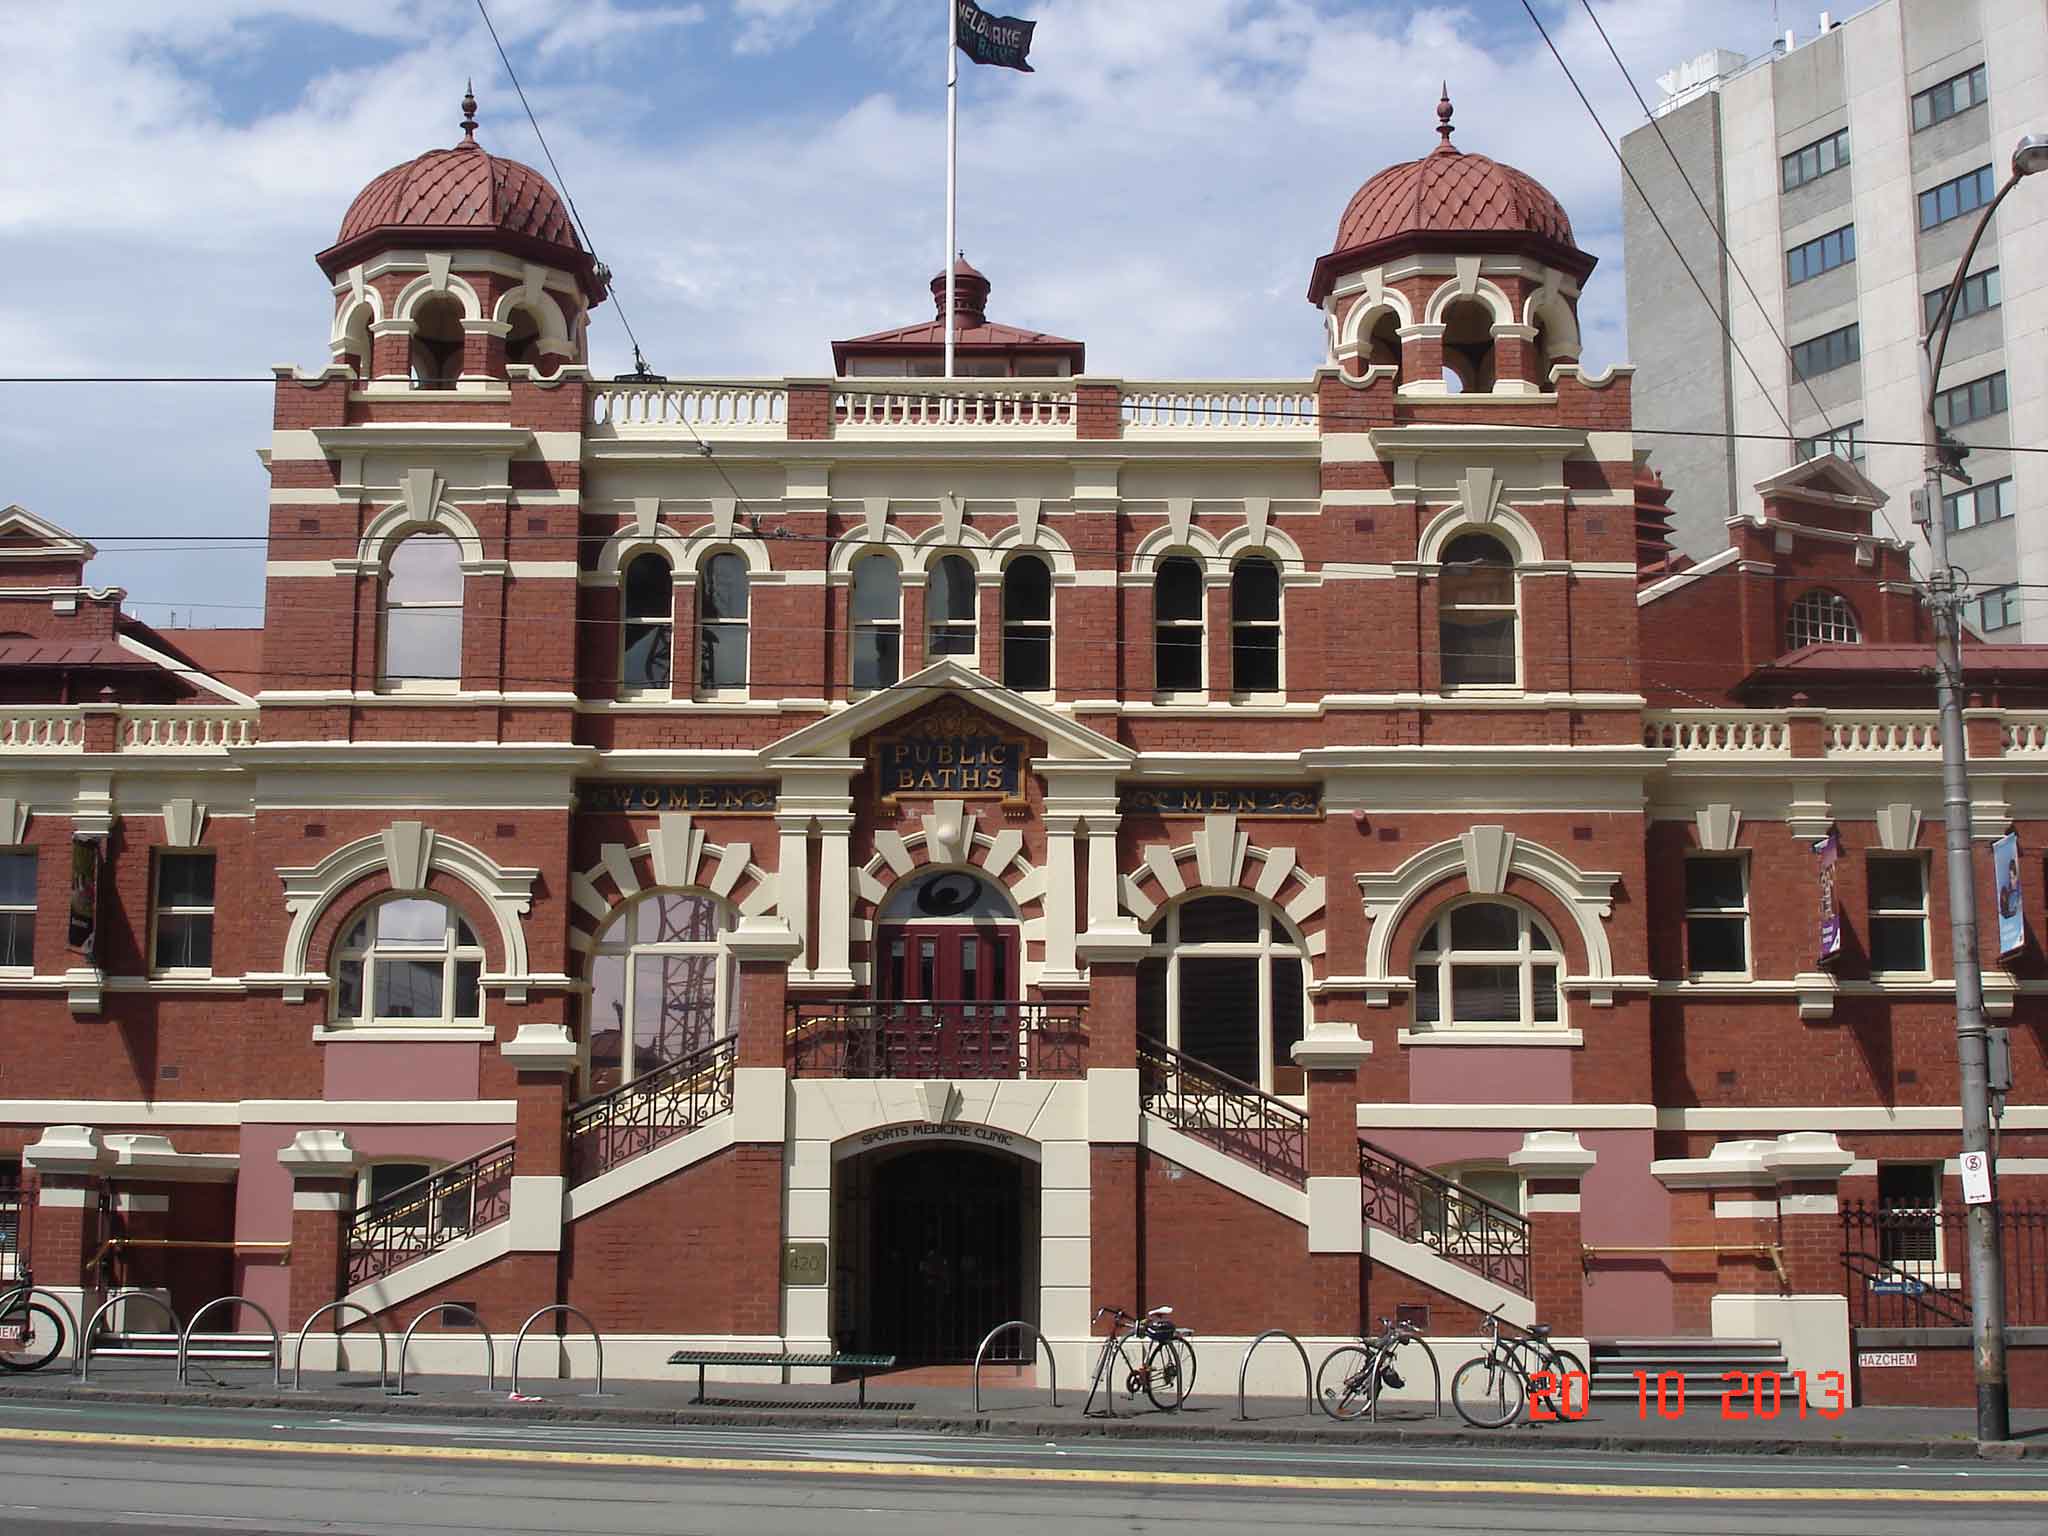 MelbournePublic Baths1860-Swanston Street Melbourne city